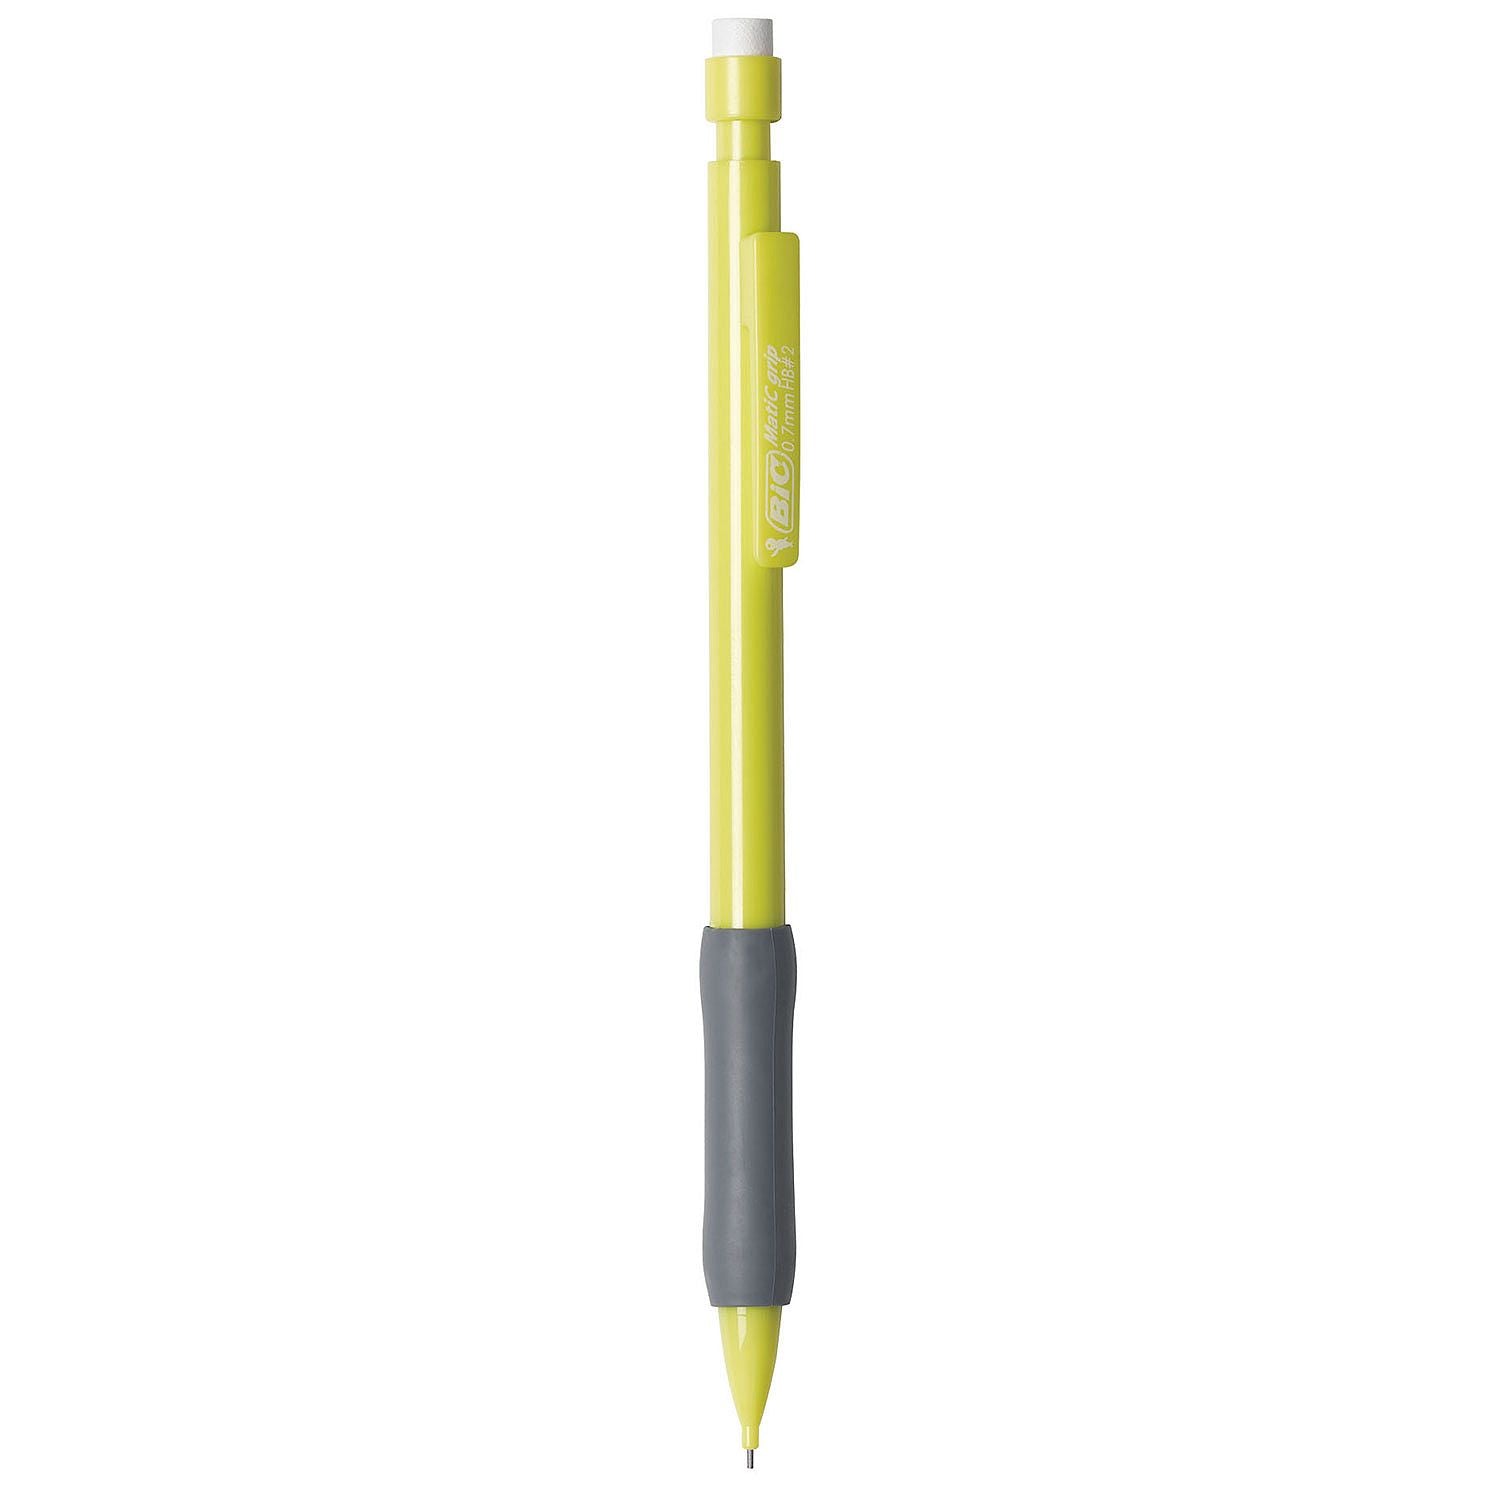 Bic - Matic Grip Mechanical Pencil, HB #2, 0.7 mm - 32 Pencils